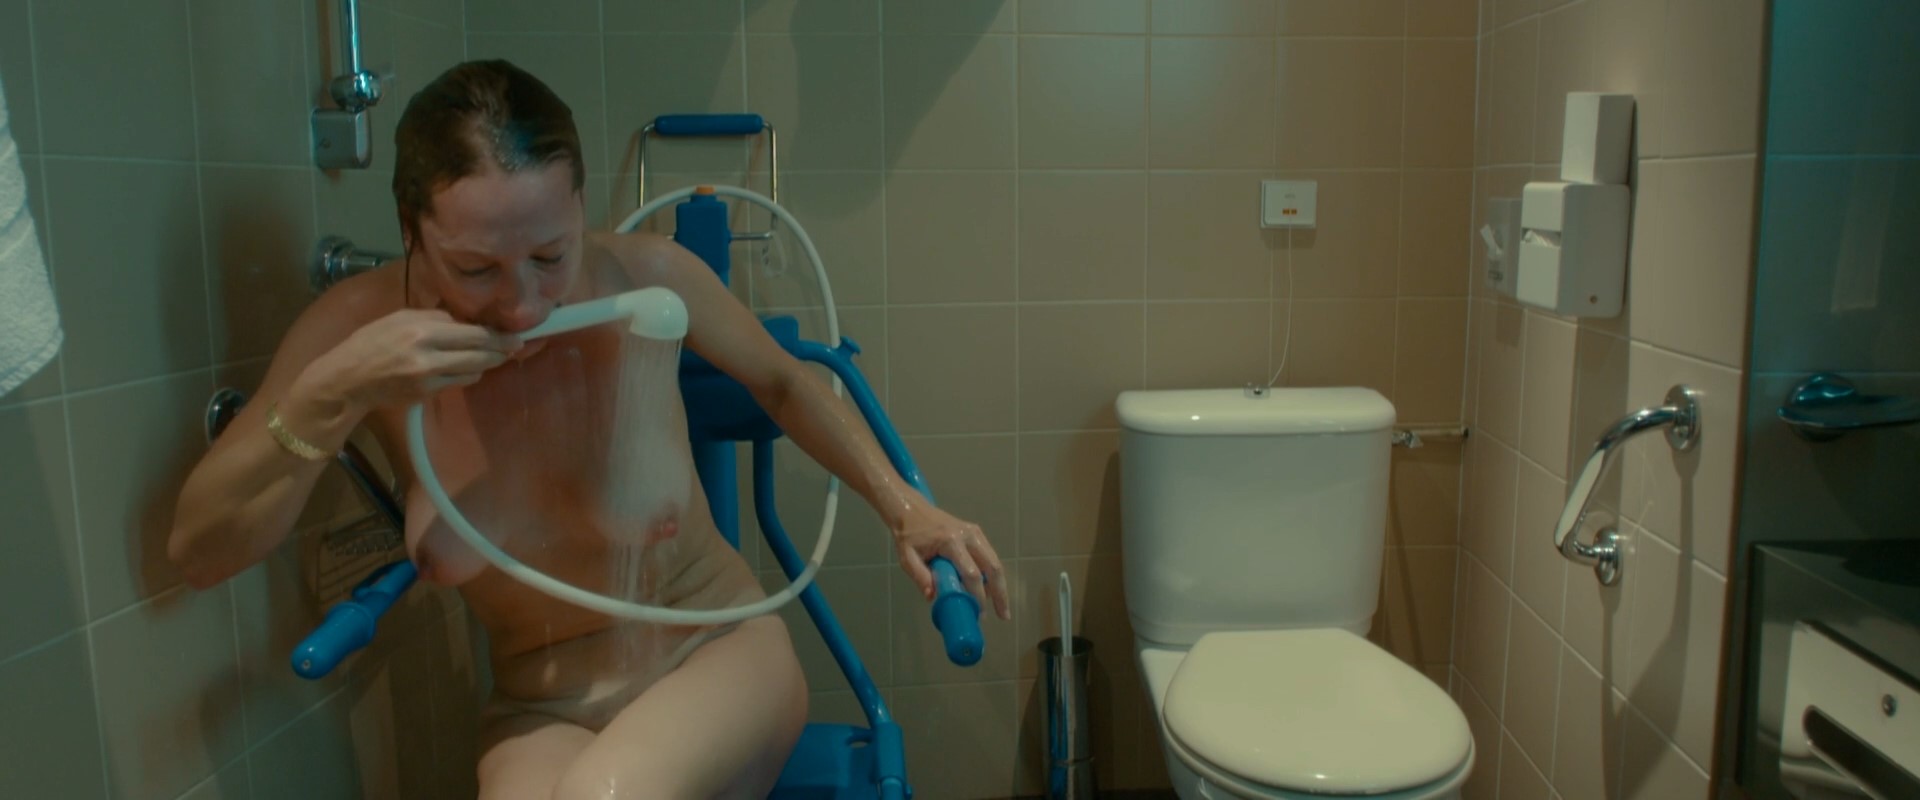 Emmanuelle Bercot - Mon roi (2015) HD 1080p